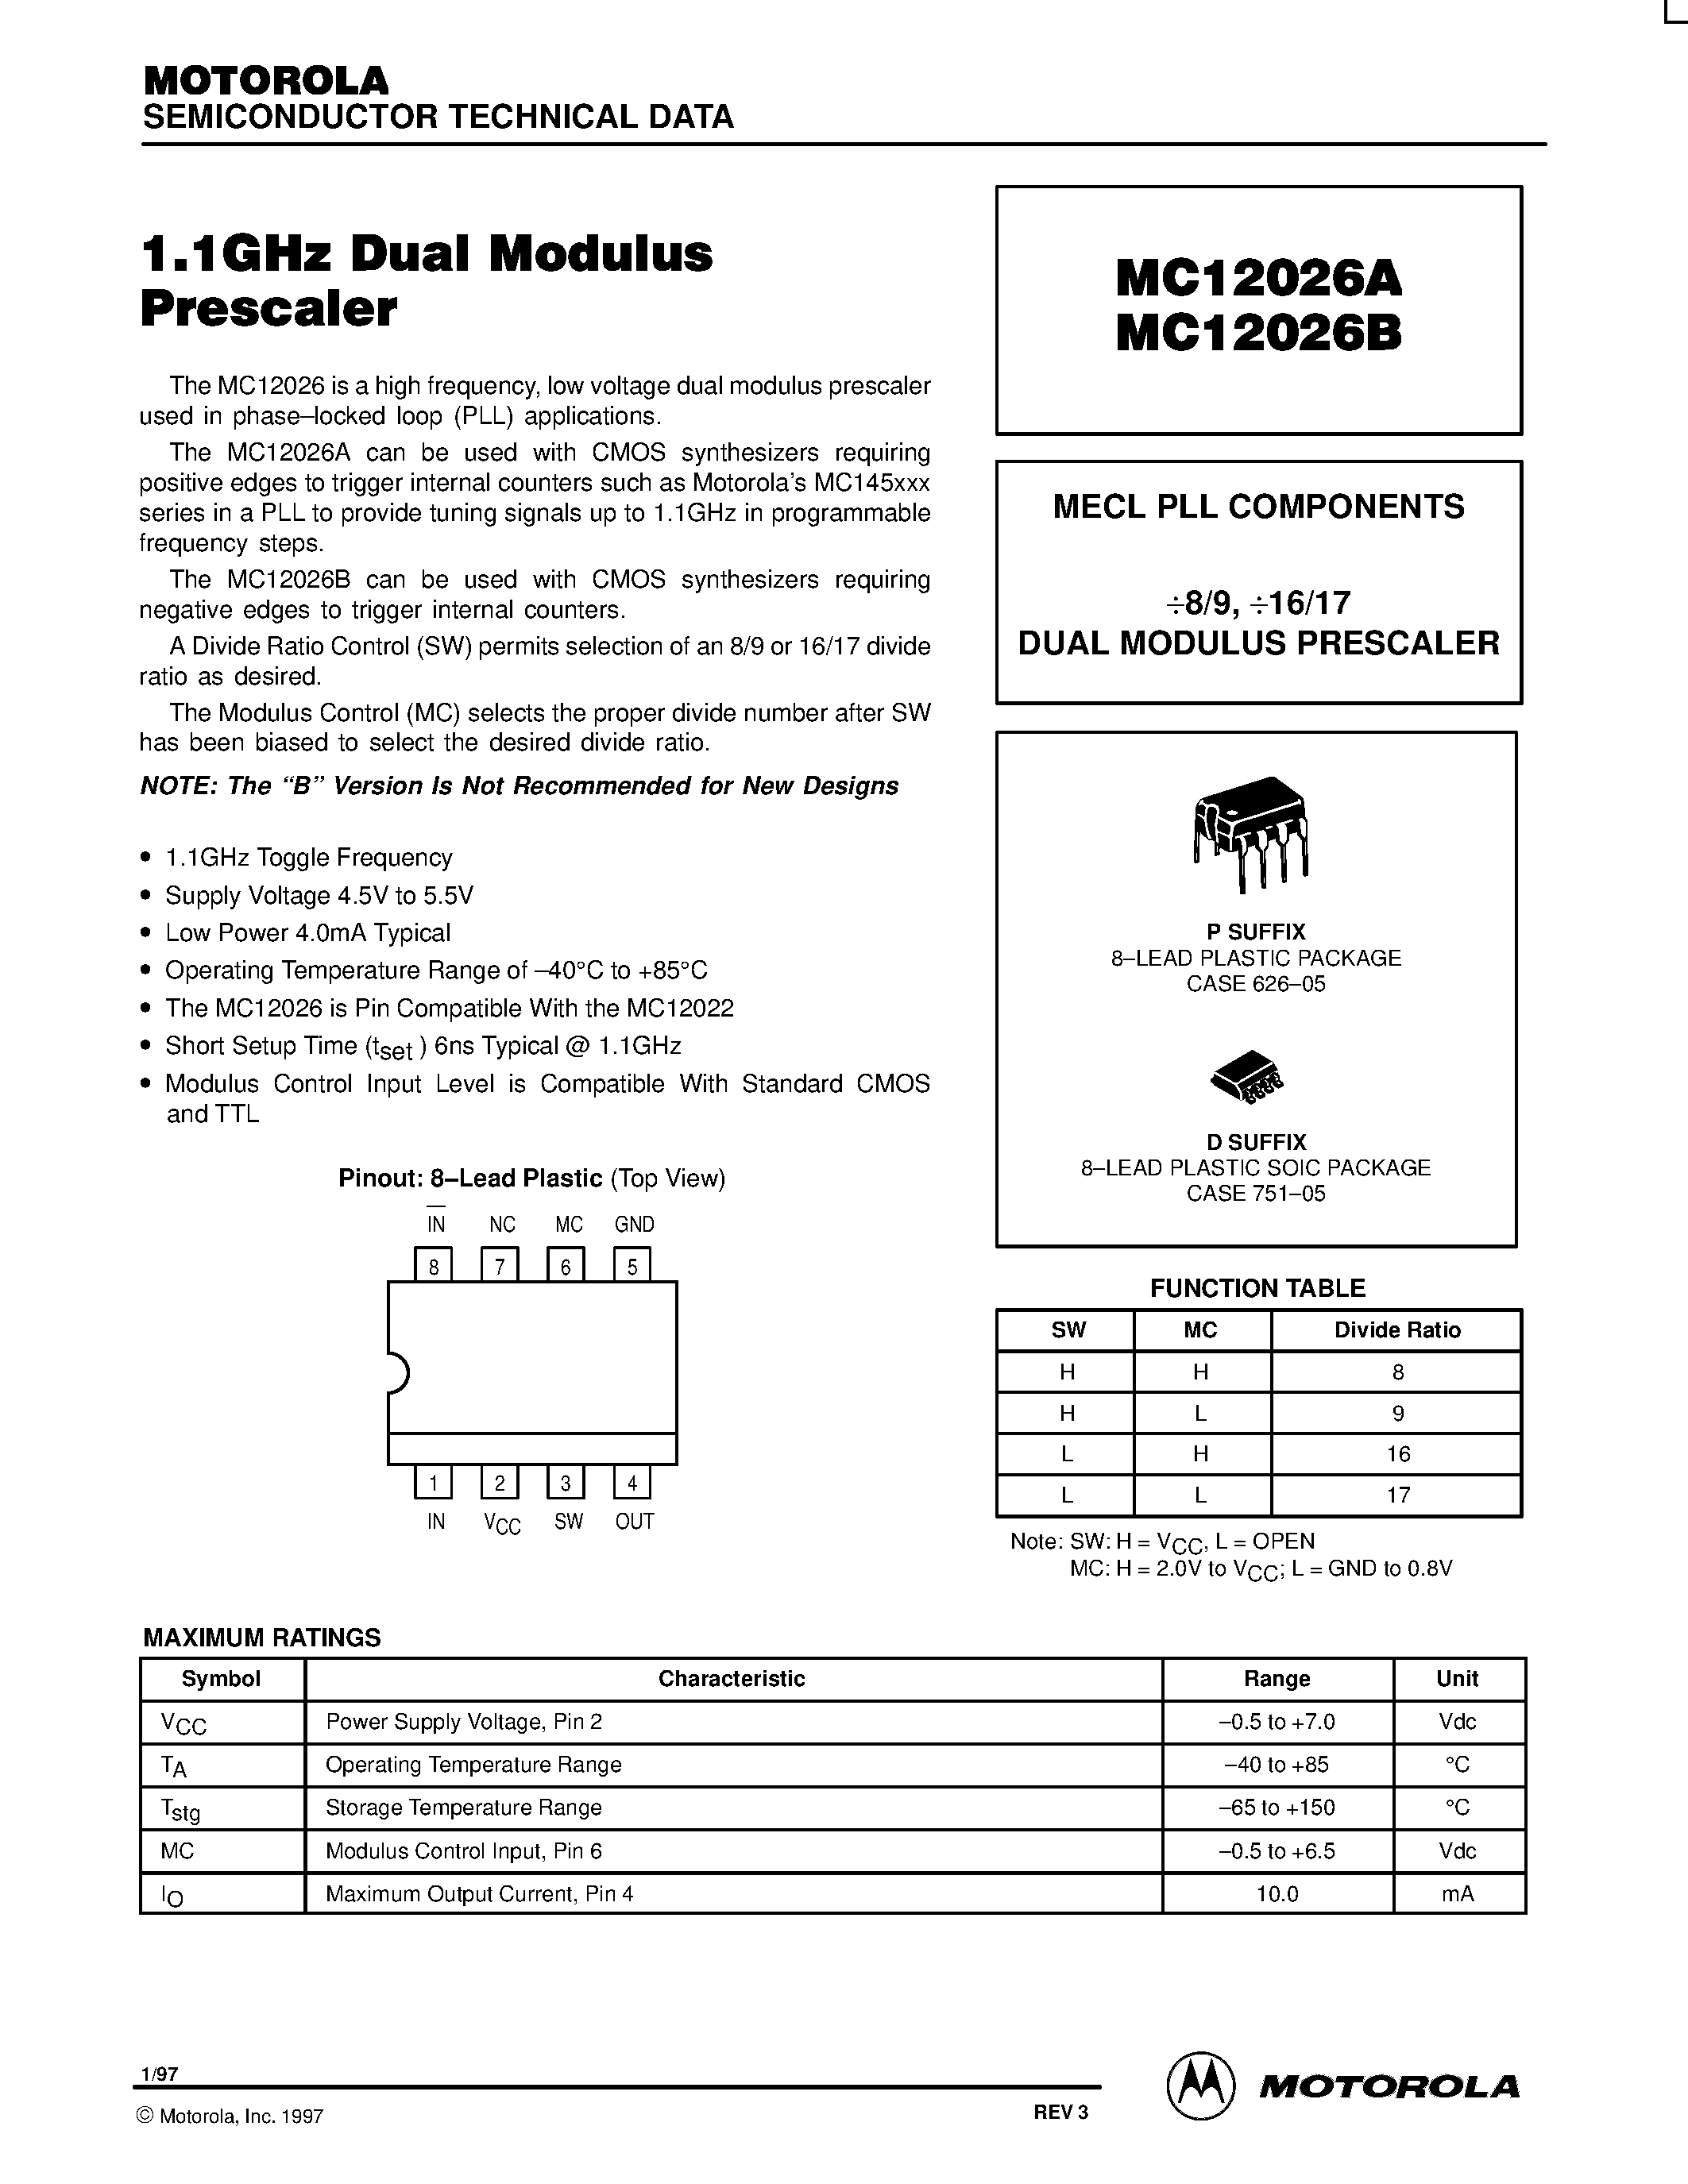 Datasheet MC12026 - MECL PLL COMPONENTS 8/9 / 16/17 DUAL MODULUS PRESCALER page 1